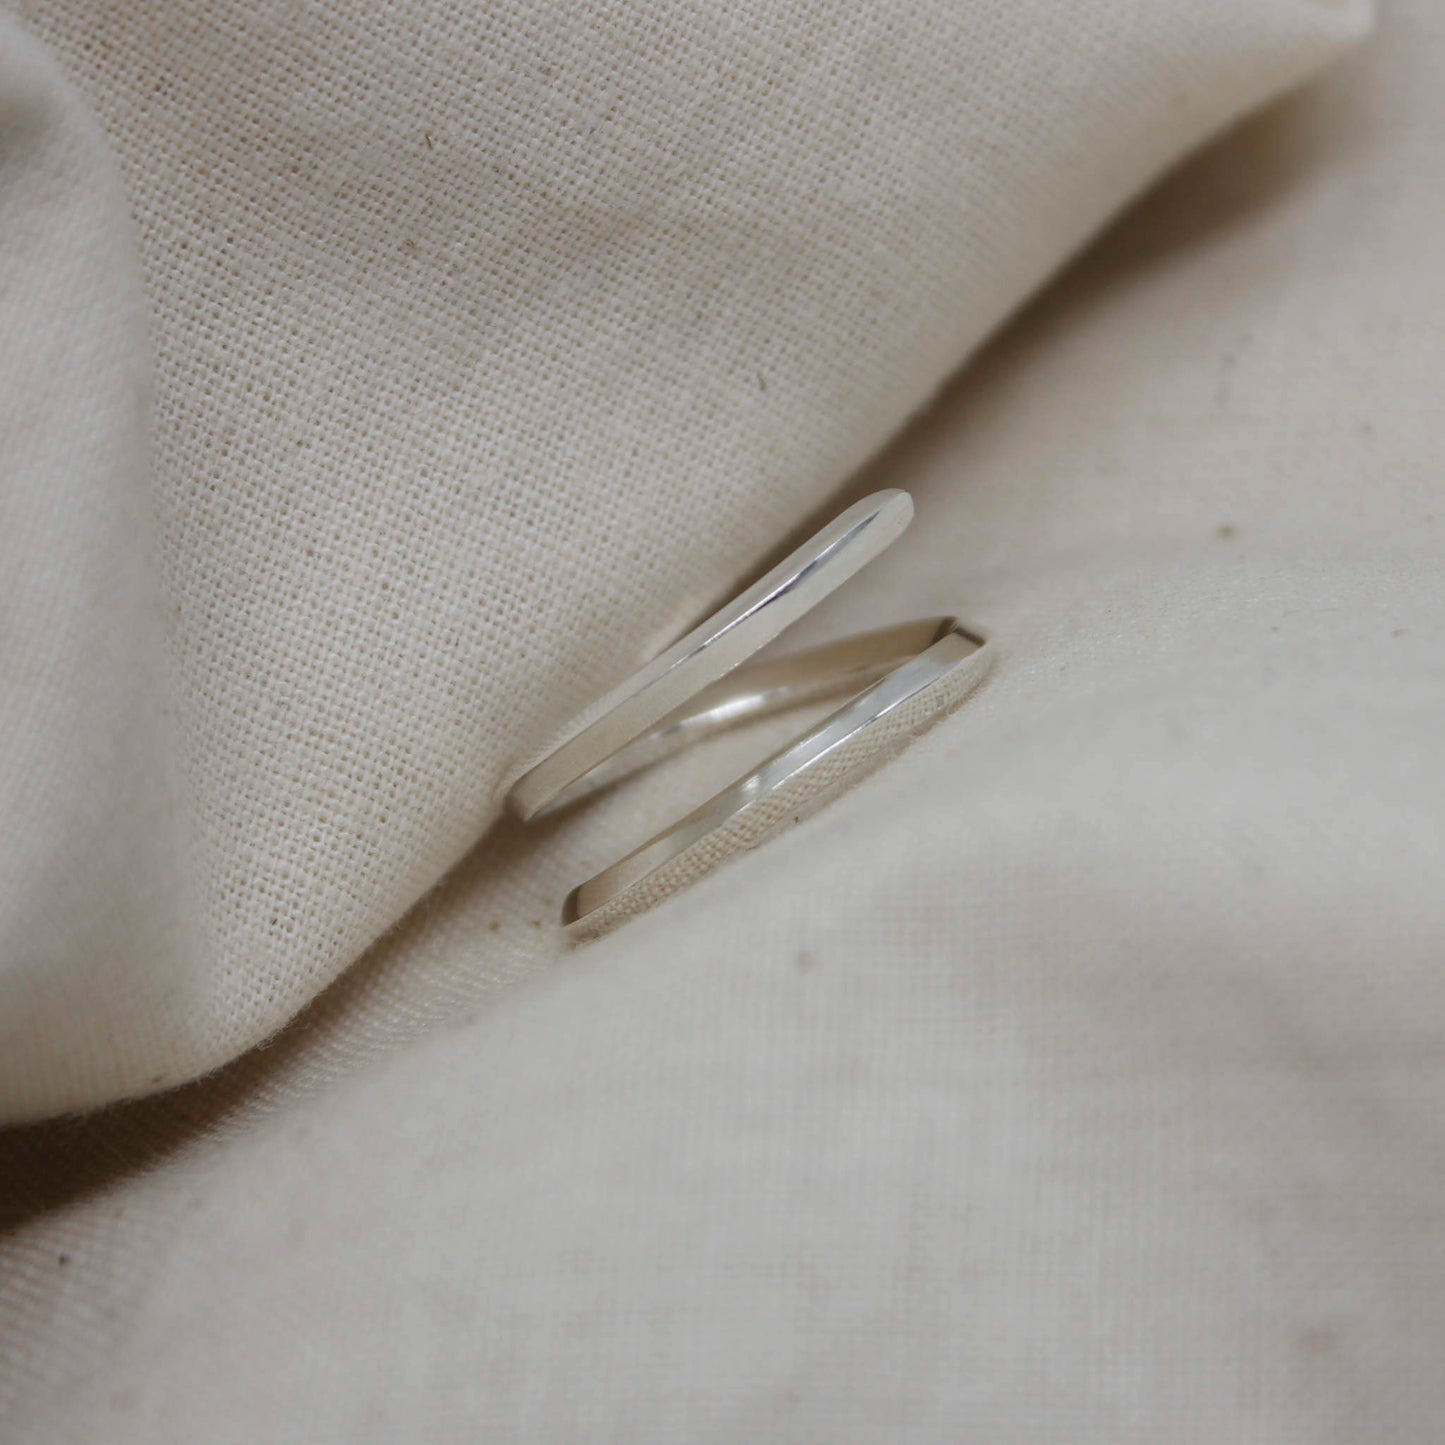 minimalist silver flicker ring handmade for everyday wear